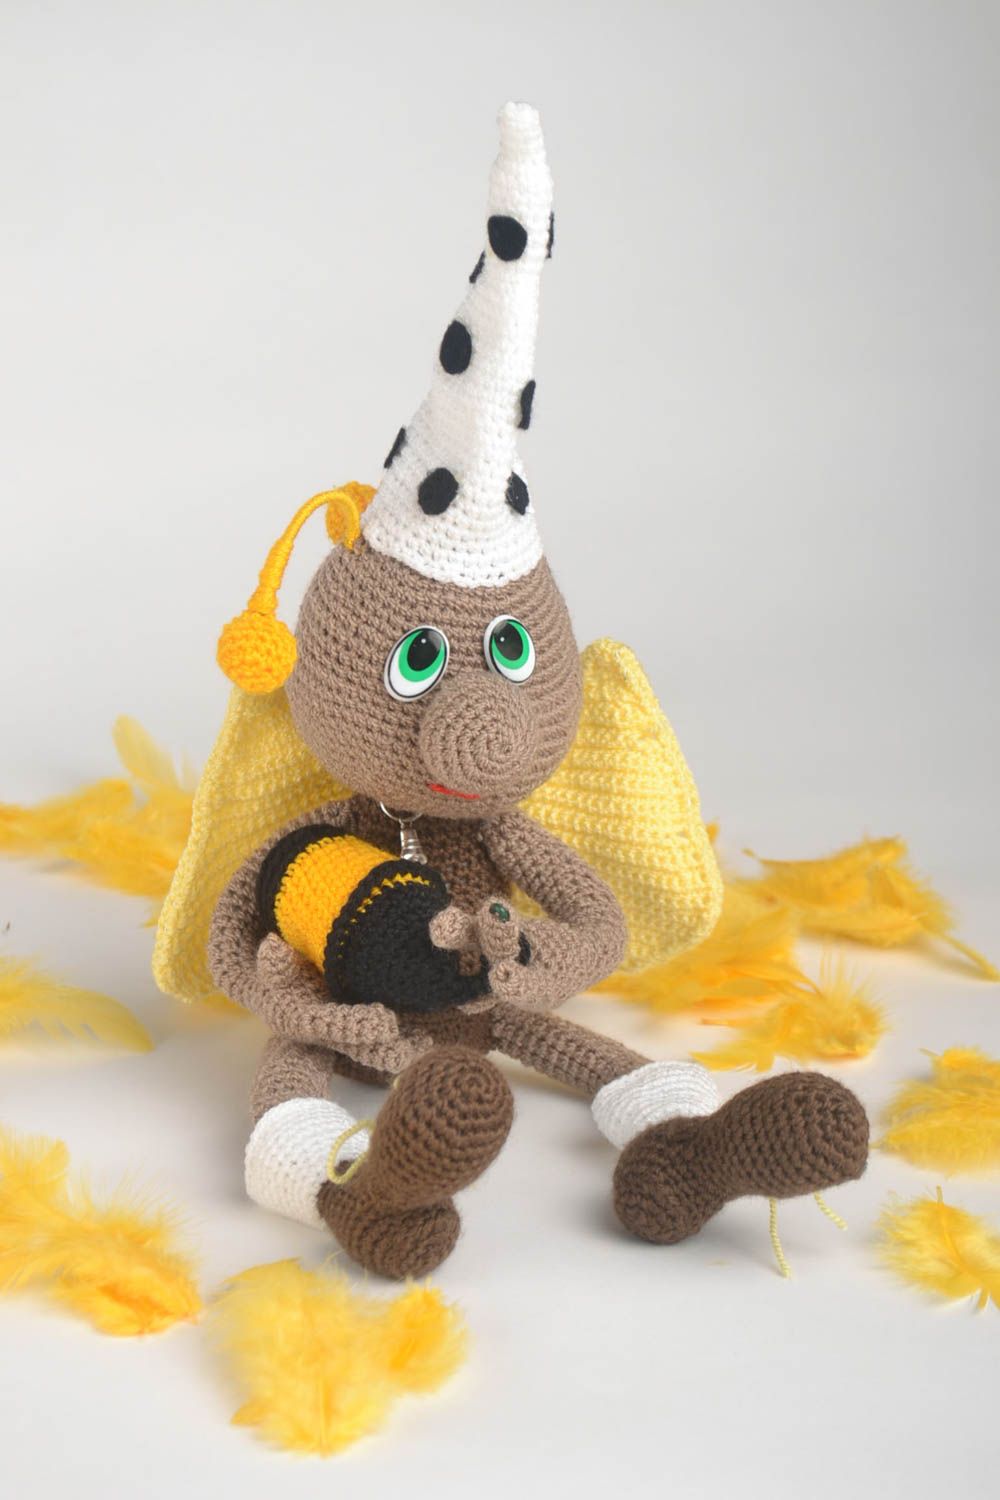 Beautiful handmade crochet soft toy stuffed toy birthday gift ideas photo 1